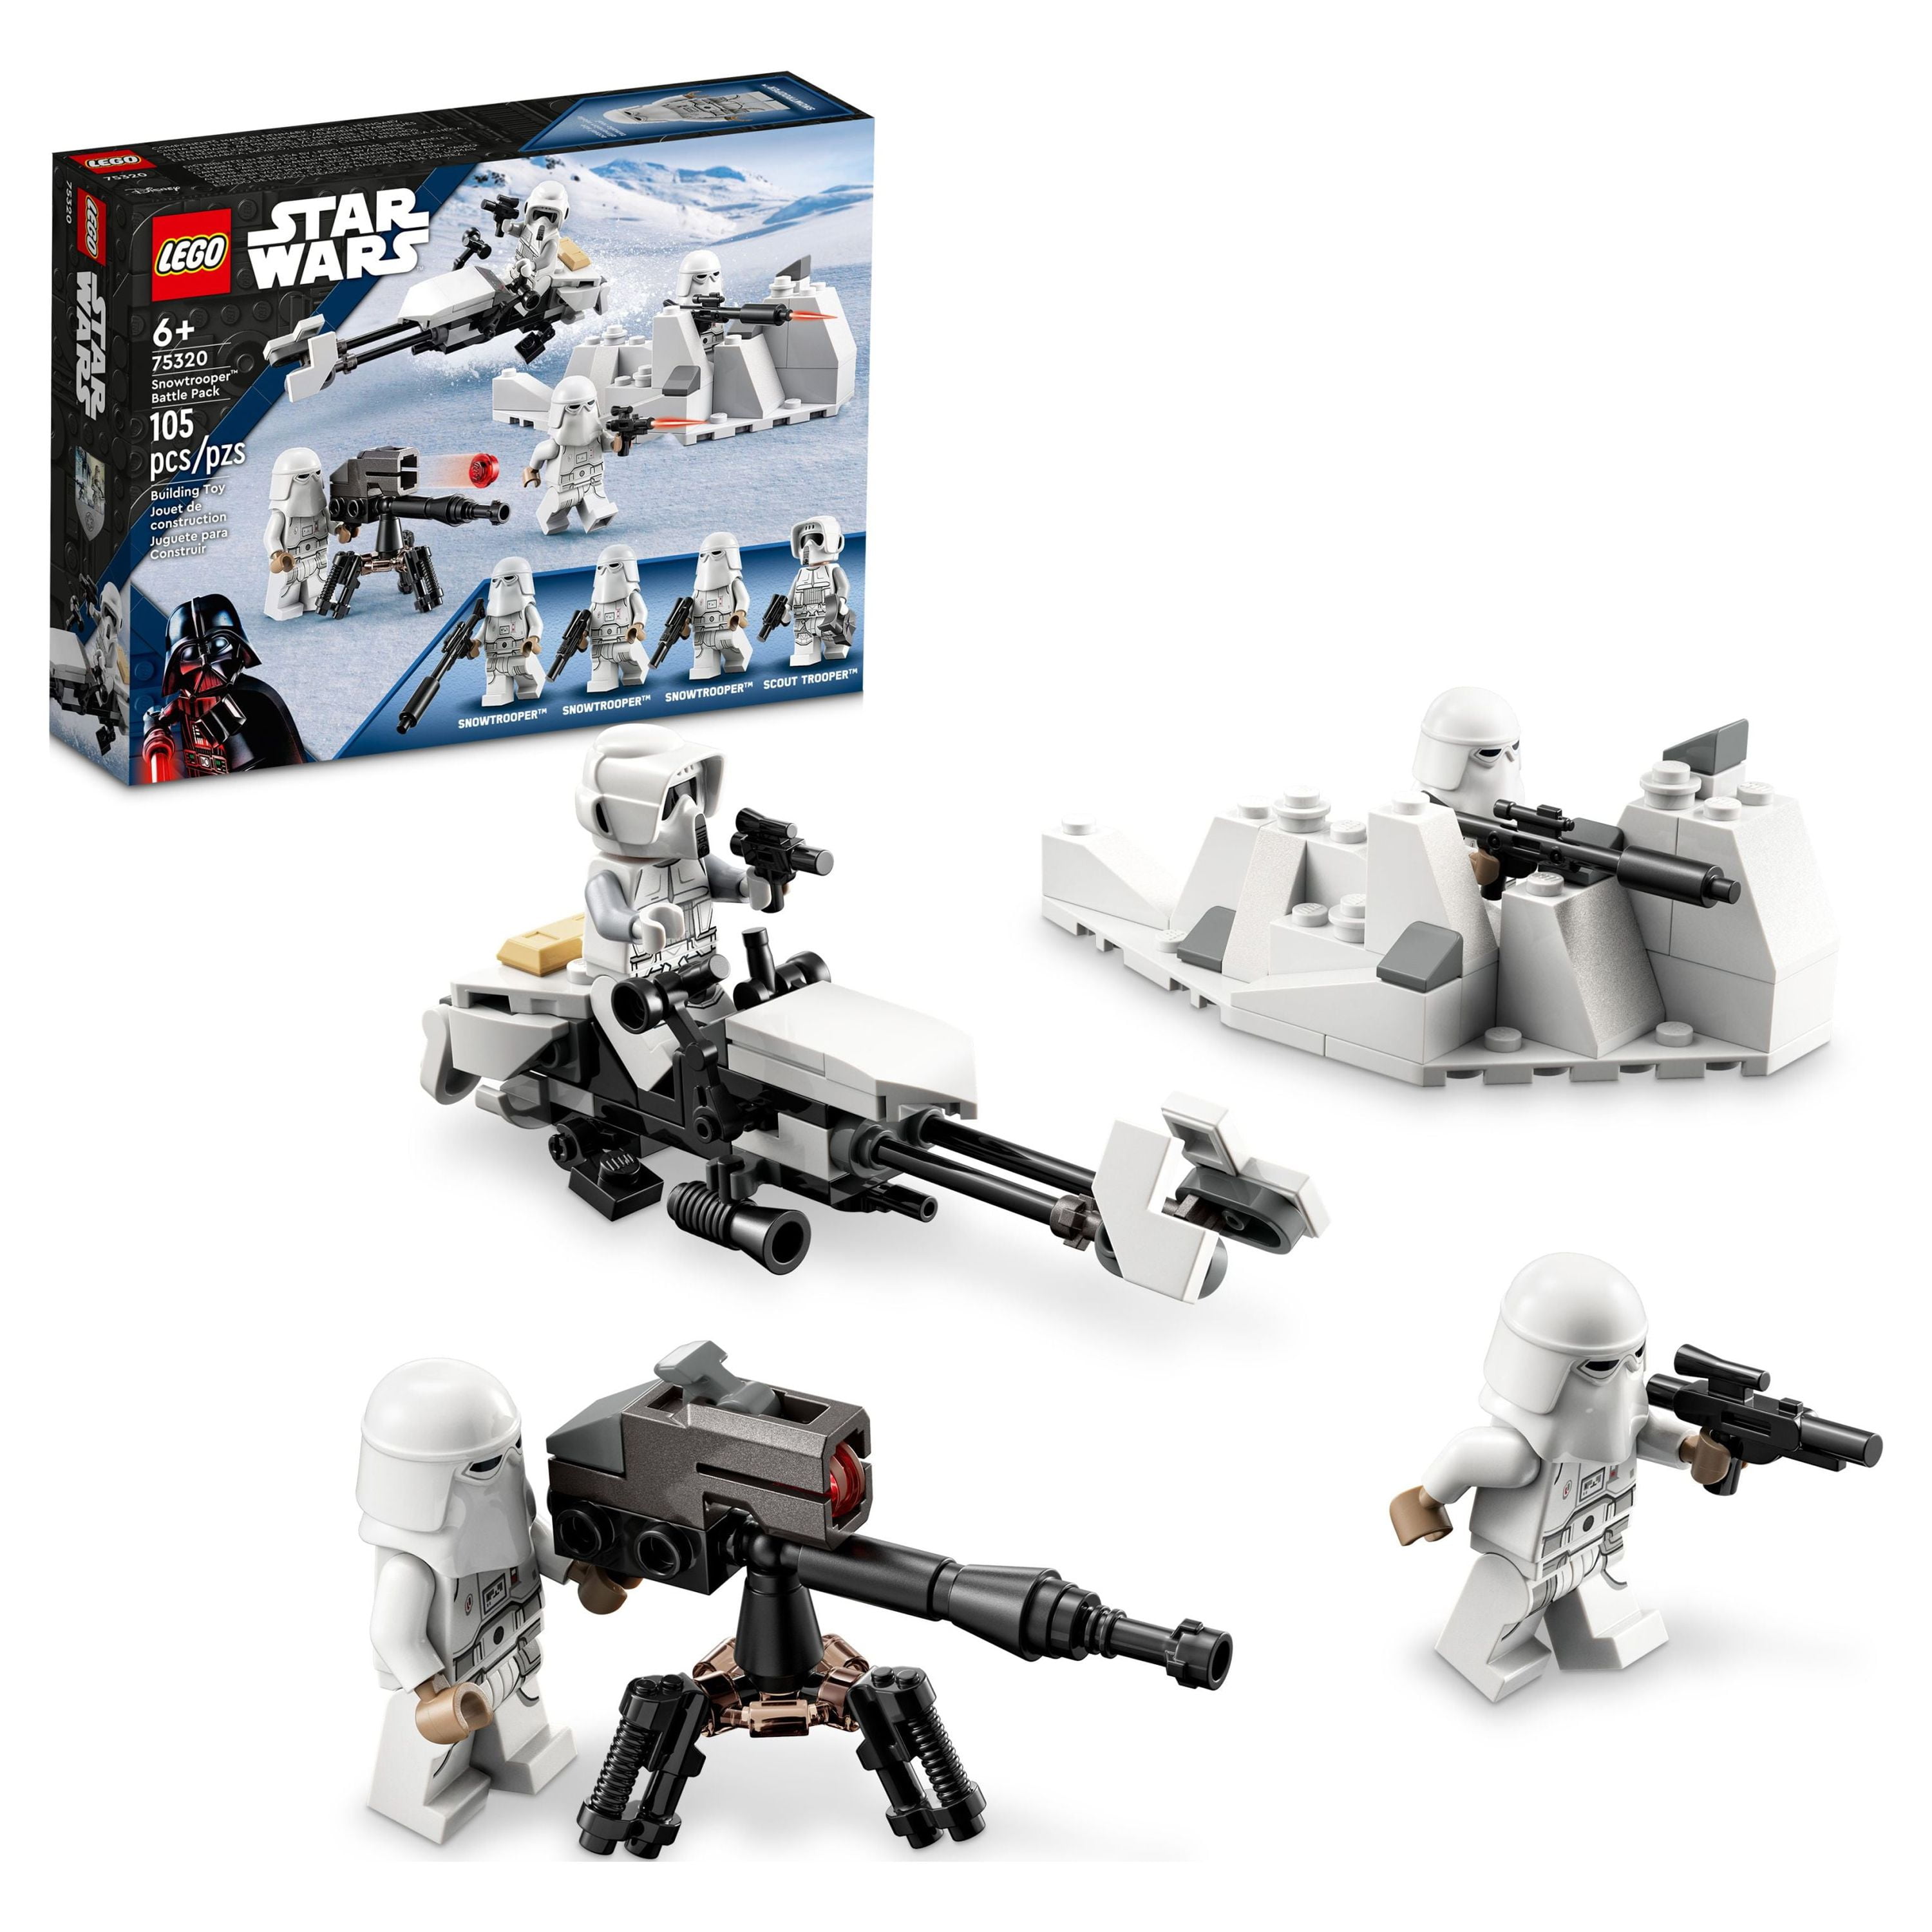 Accessoire pour Figurine LEGO® : Arme - Star Wars Blaster